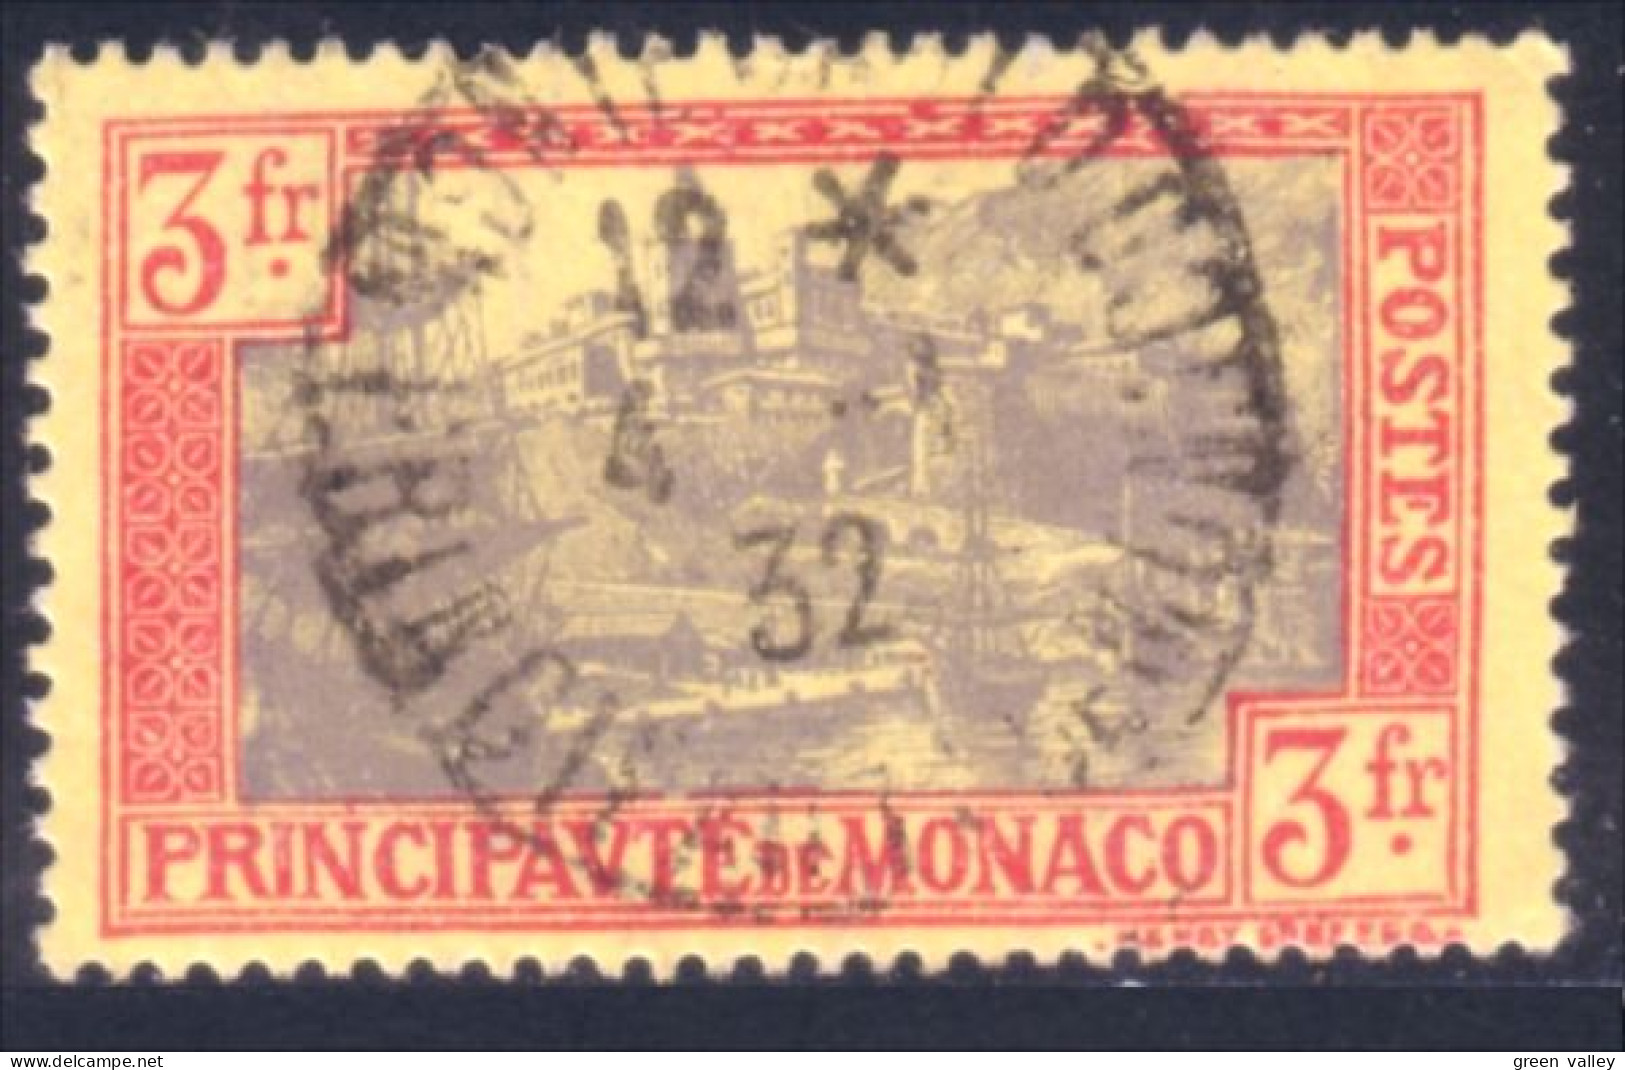 630 Monaco YT 101 3Fr Carmin Ardoise S. Jaune Superbe Oblitération Circulaire 1937 (MON-25) - Usados